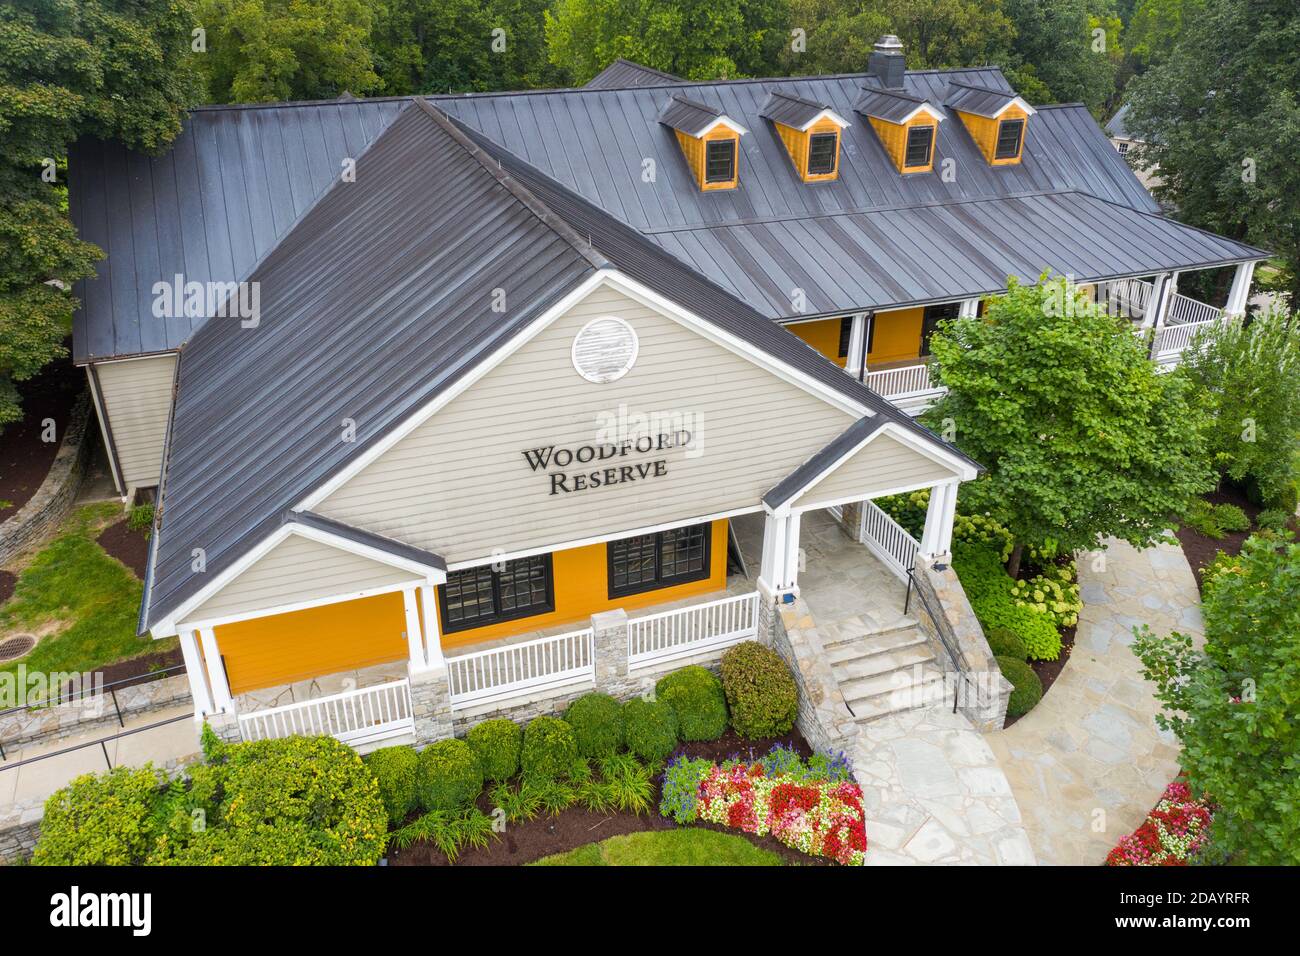 Woodford Reserve, distillerie de bourbon, Versailles, Kentucky, États-Unis Banque D'Images